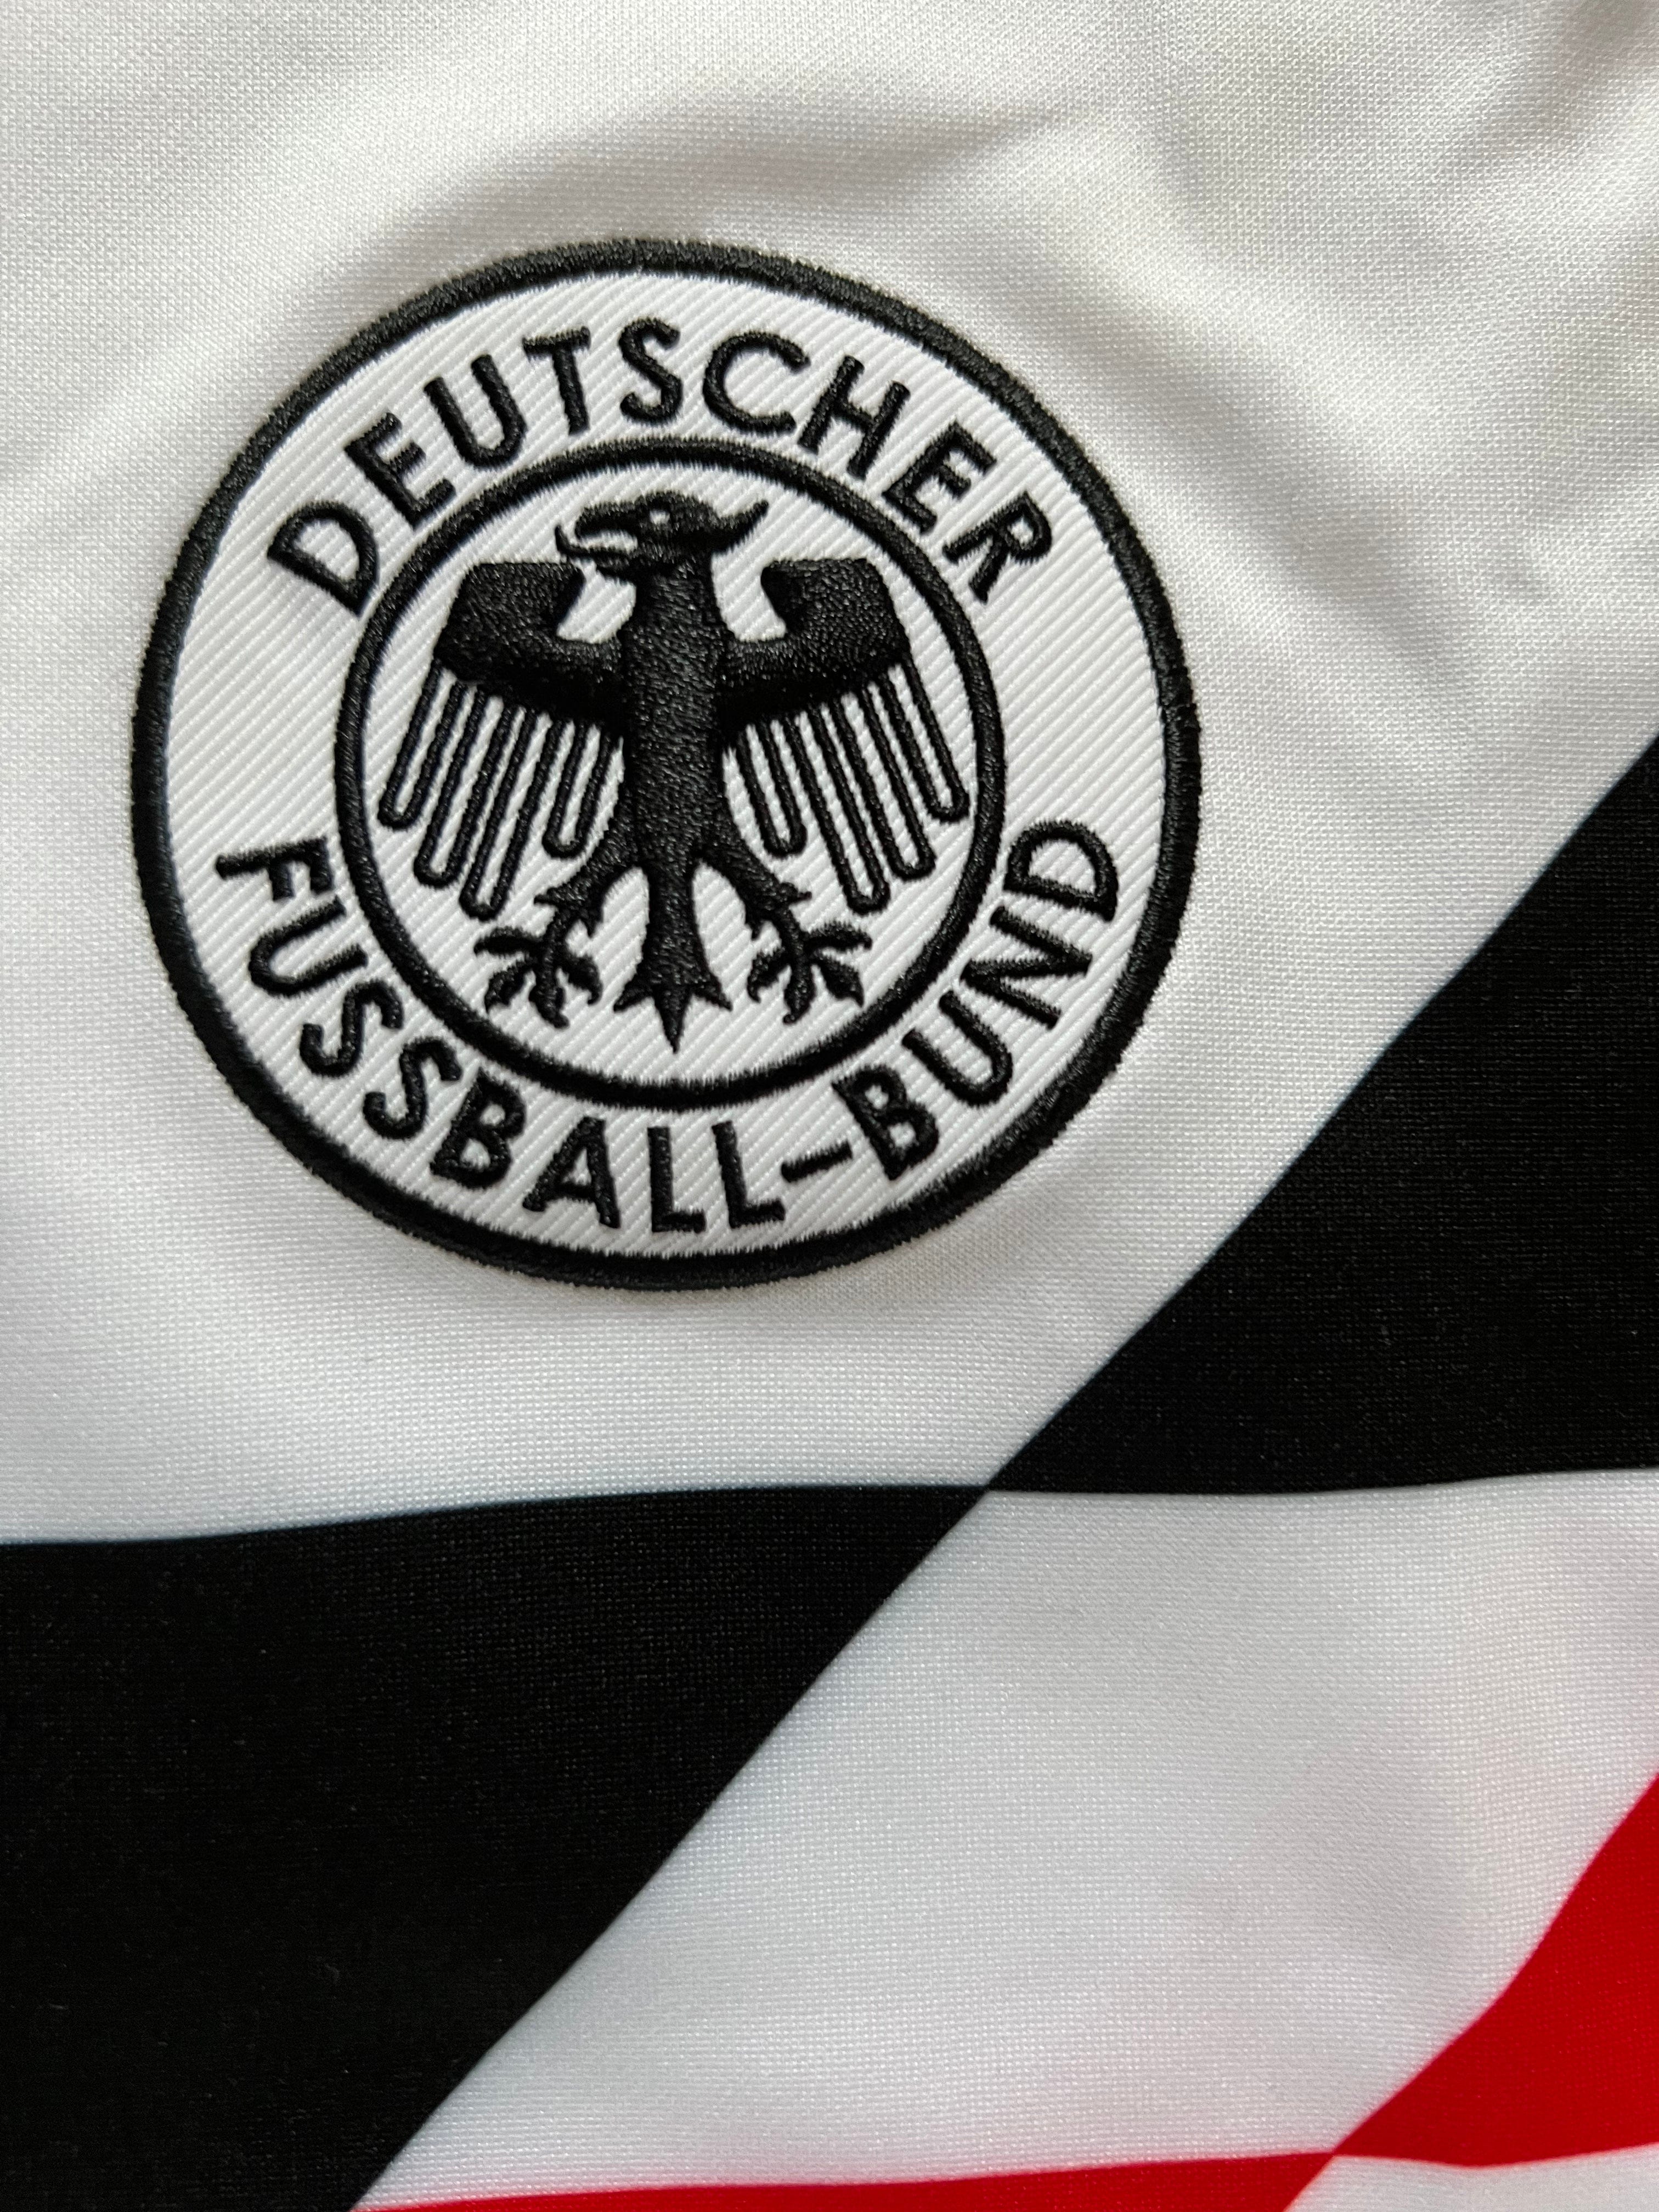 HolySport Germany Retro Adidas Mash Up Soccer Jersey Sample - Tribute to Two Different 90s Vintage Kit Shirts - Size Medium 